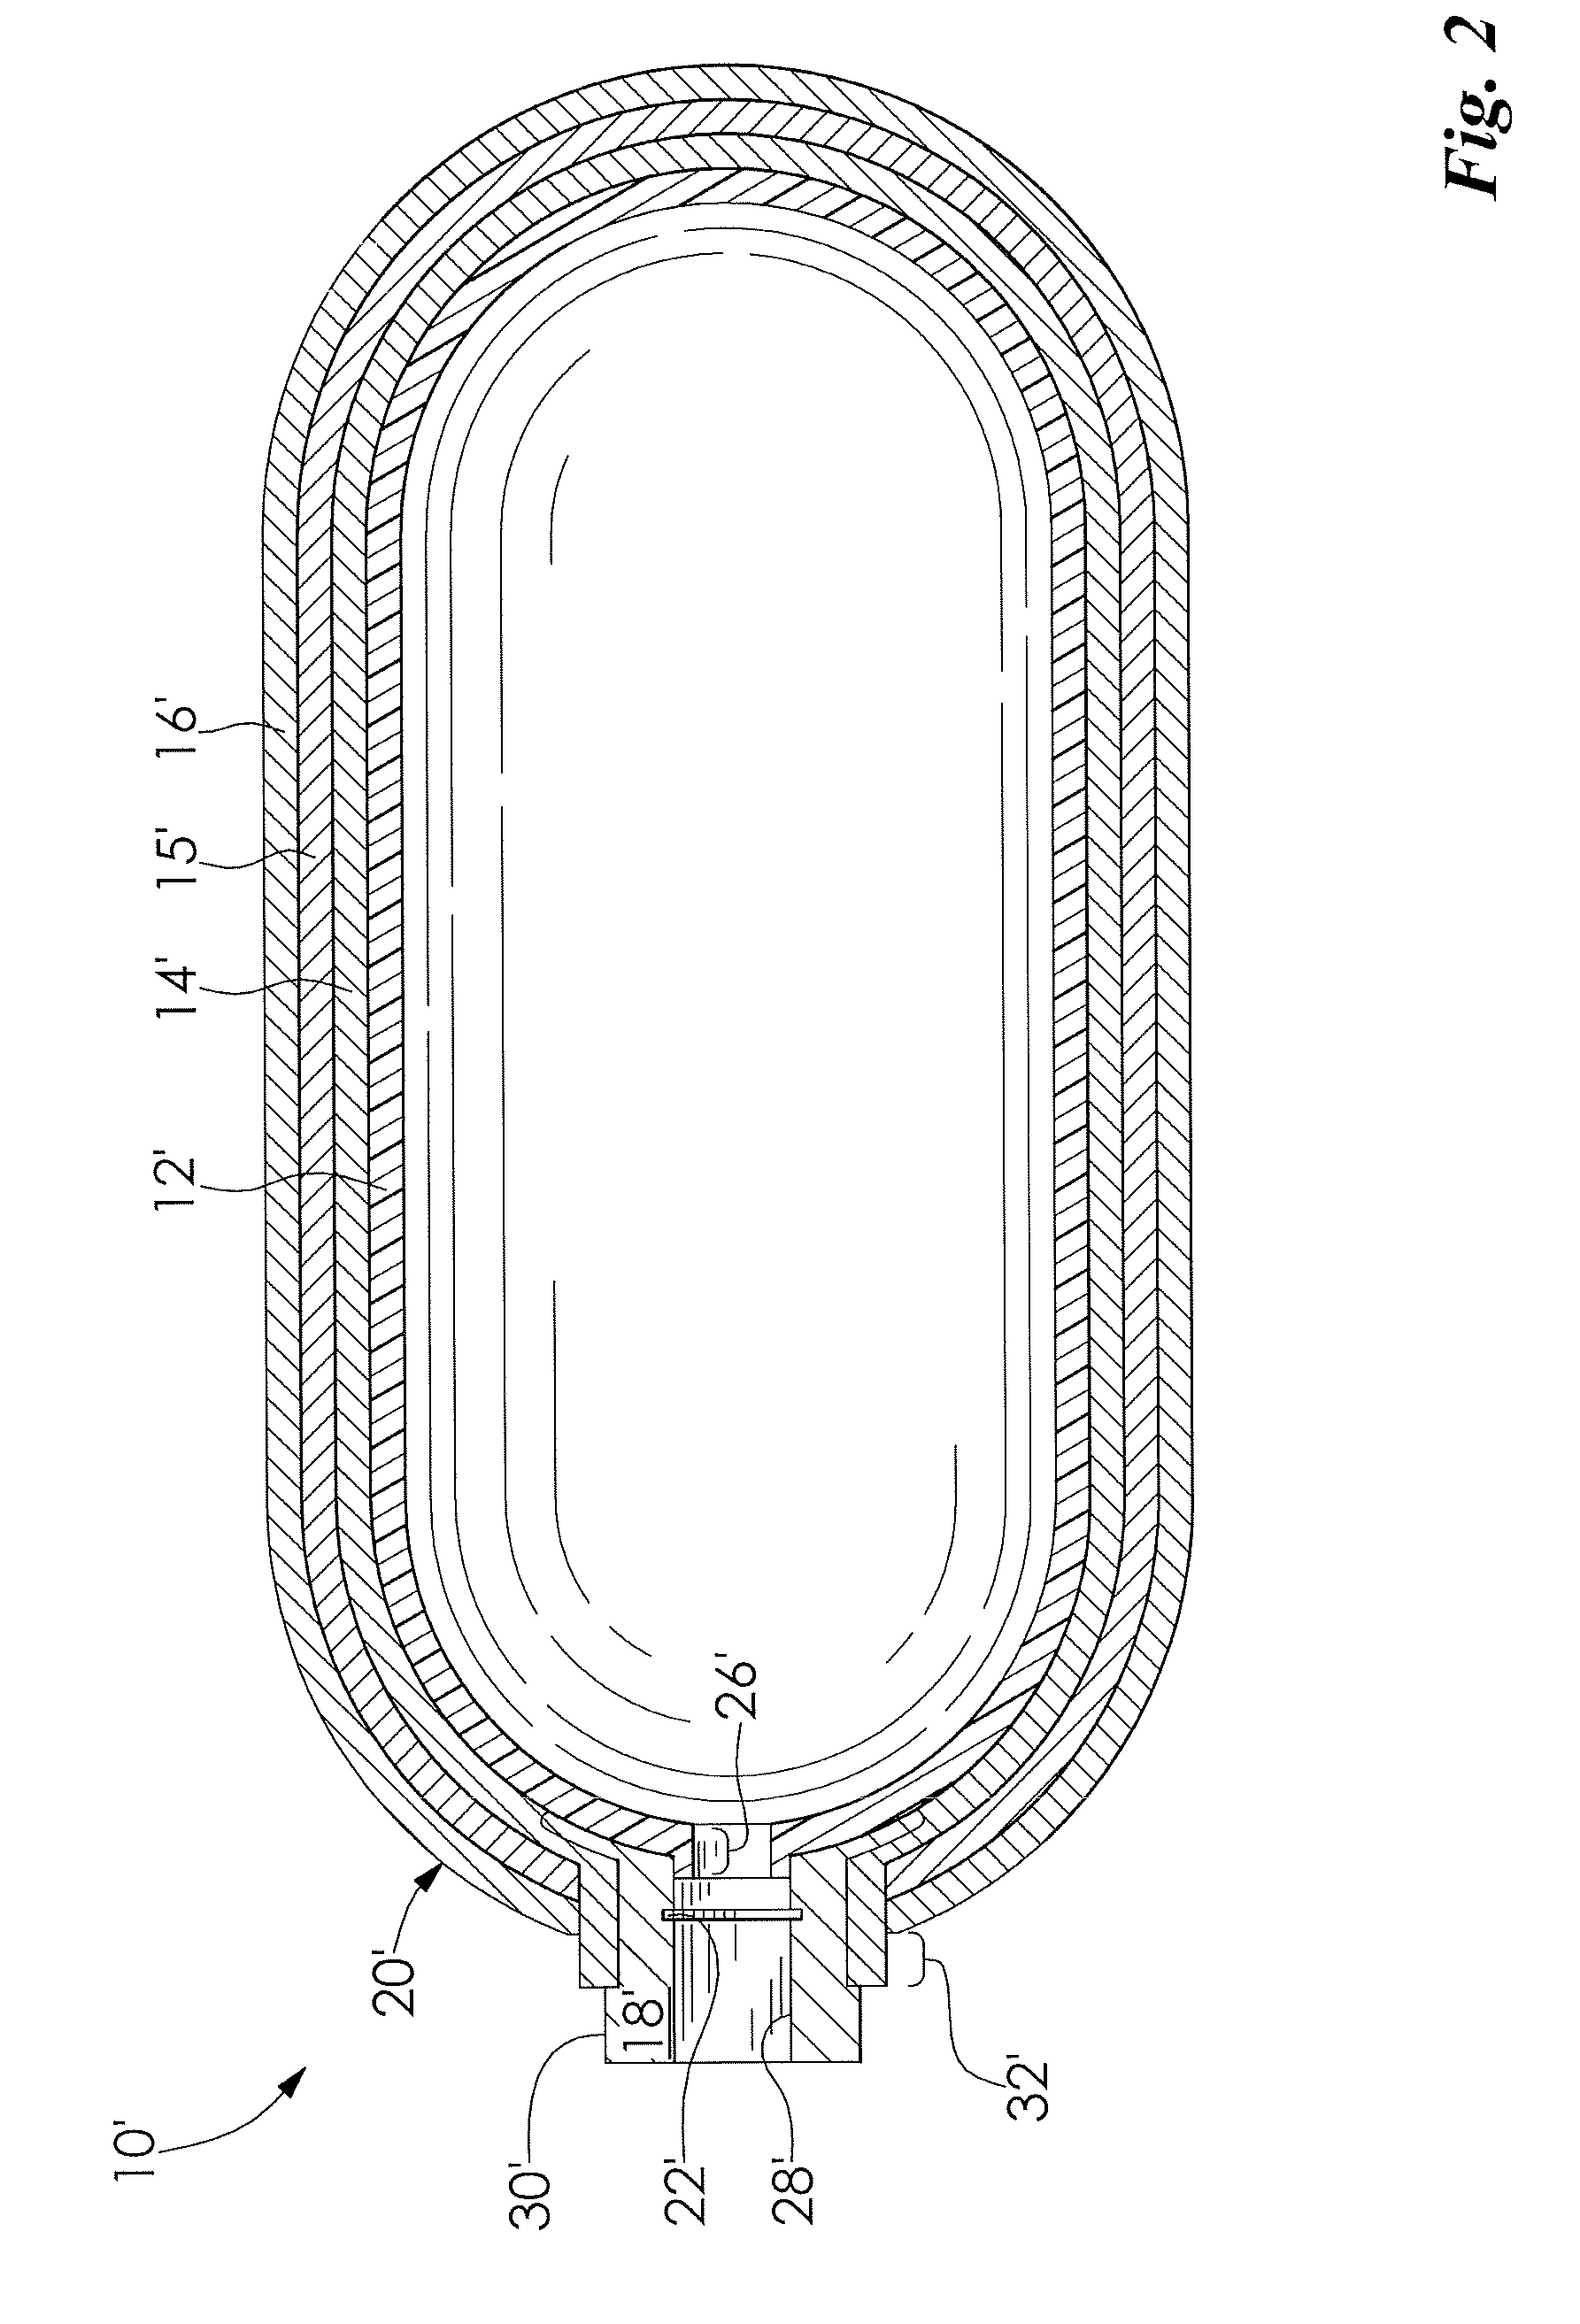 Diffusion layer for pressure vessels